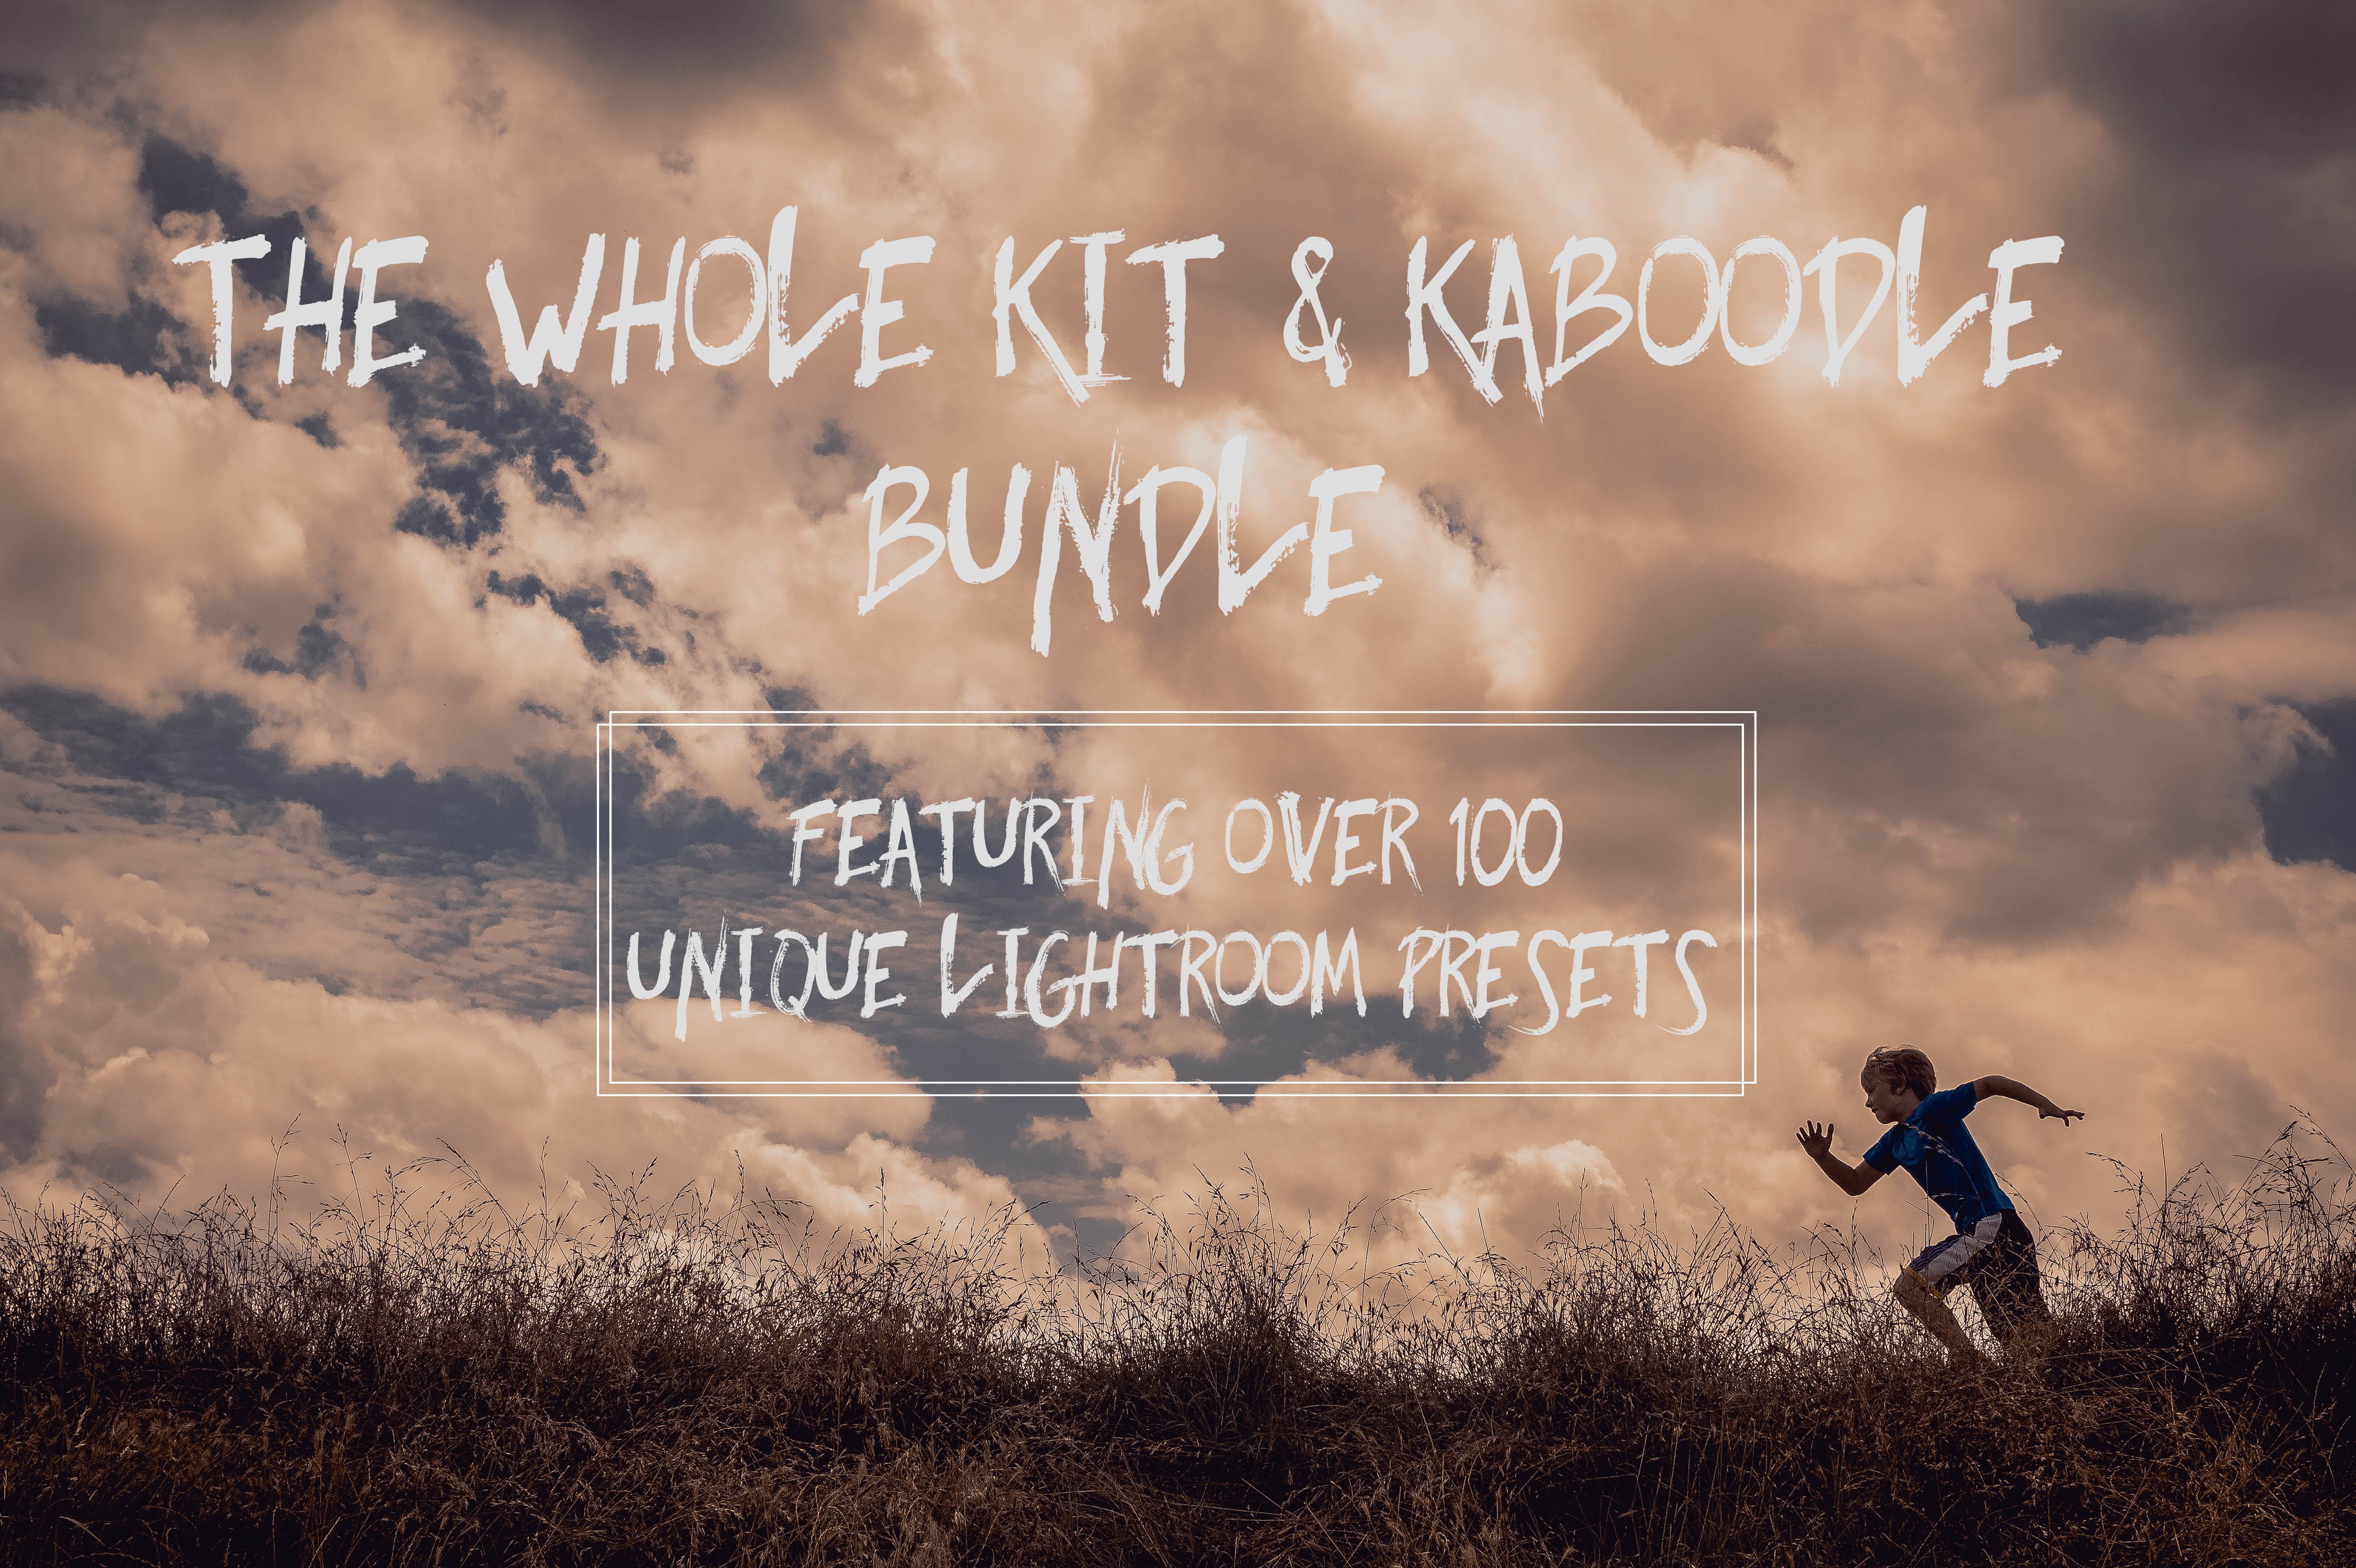 The Whole Kit & Kaboodle LR Bundlecover image.